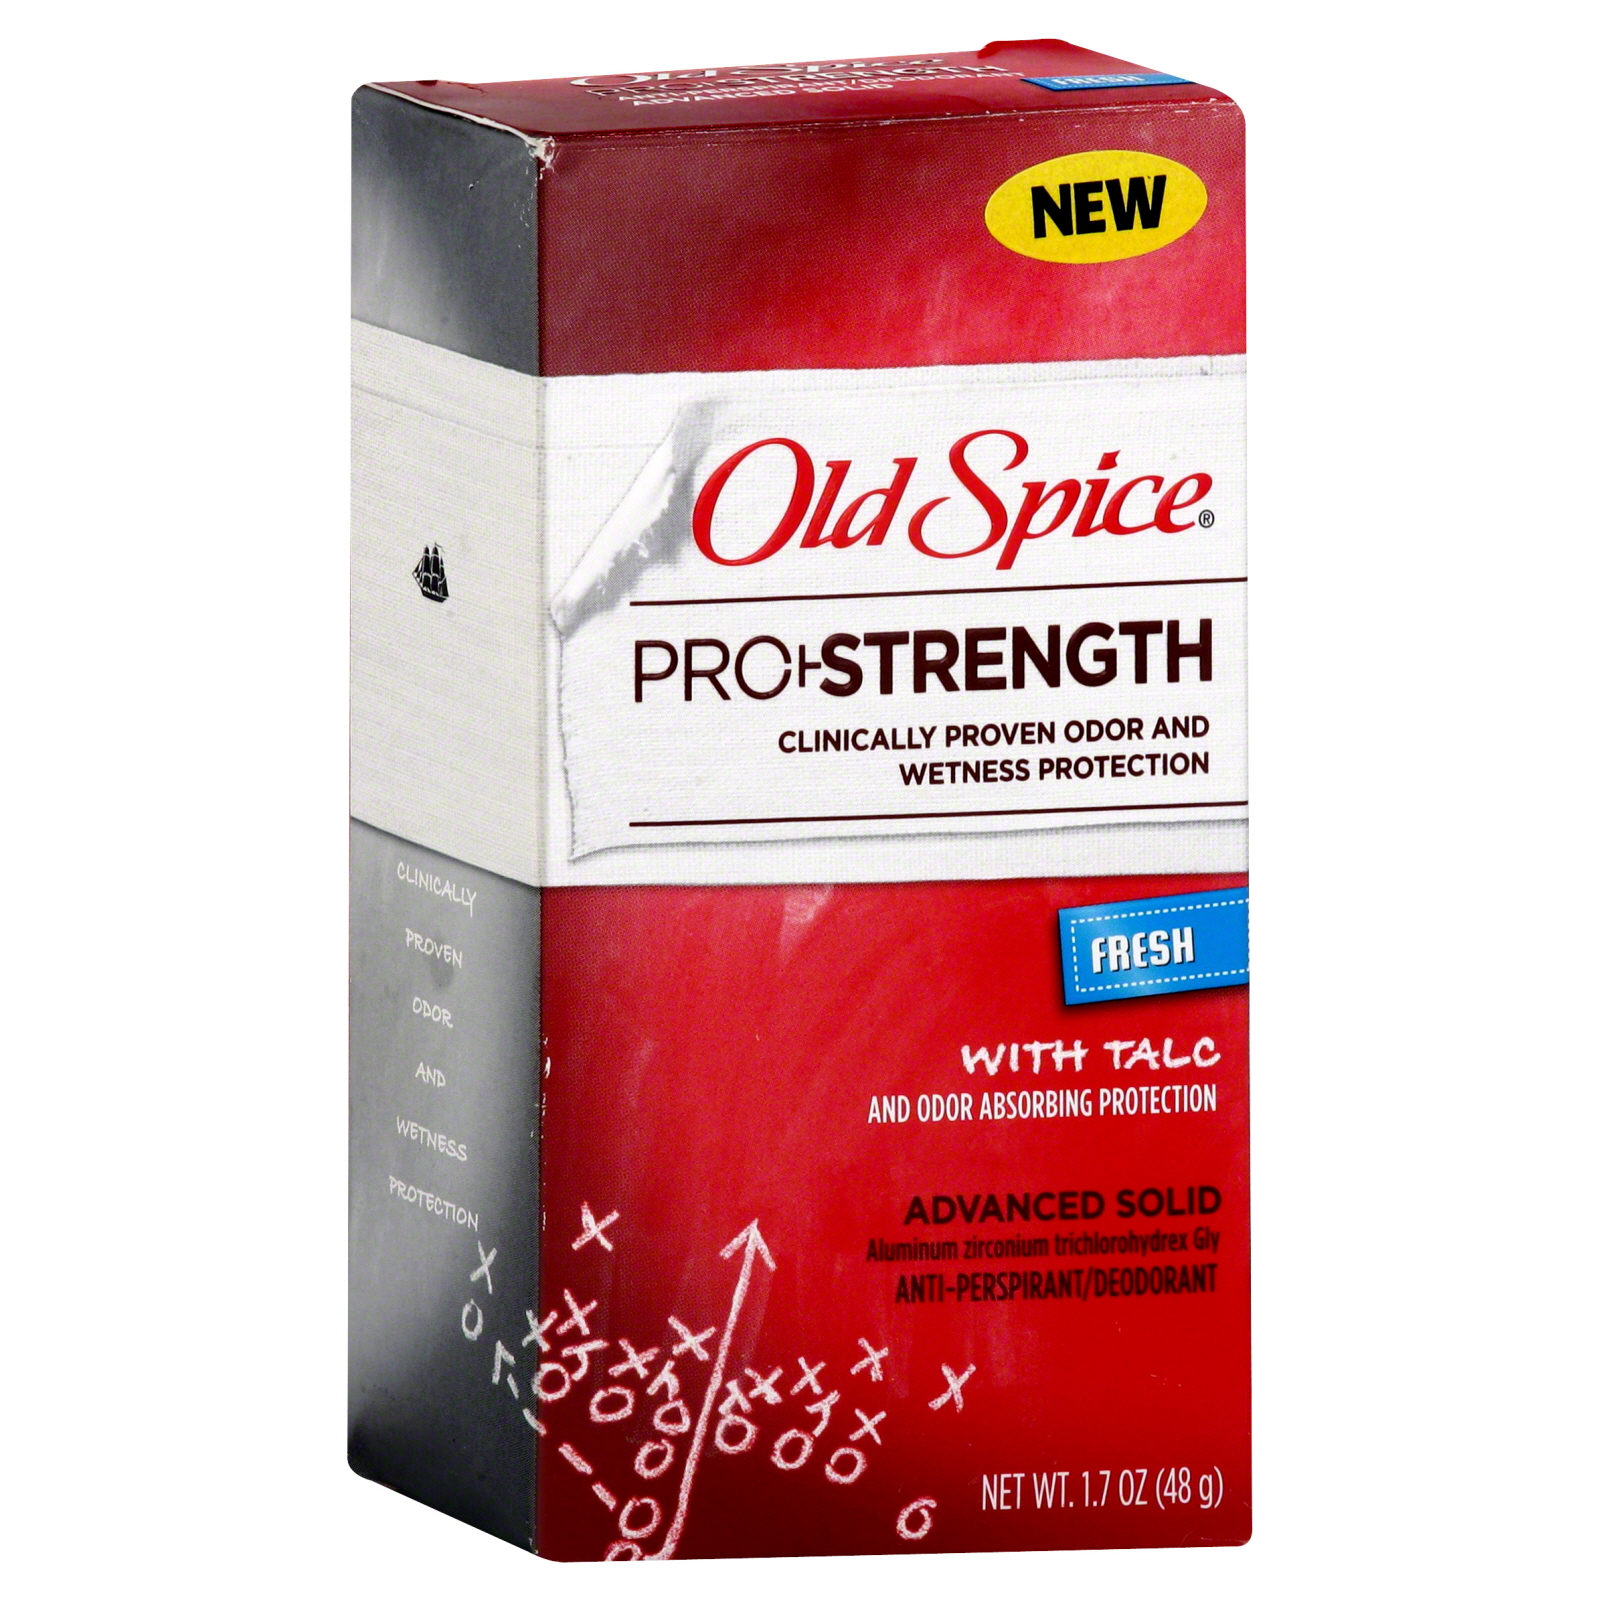 Old Spice Pro+Strength Anti-Perspirant/Deodorant, Fresh, 1.7 oz (48 g)